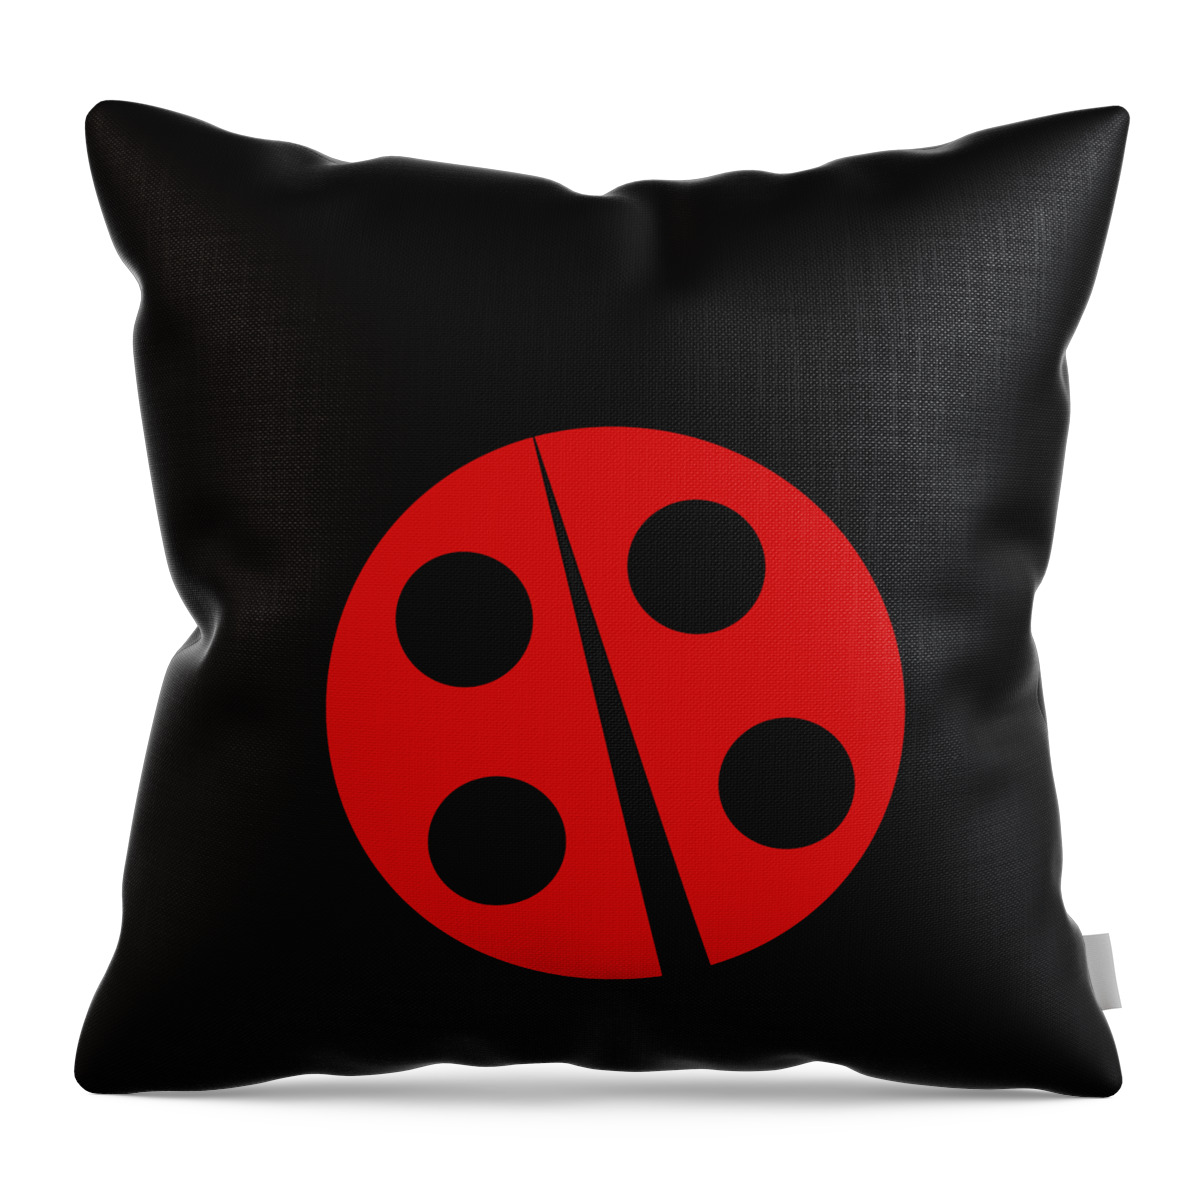 Cute Throw Pillow featuring the digital art Cute Ladybug #1 by Flippin Sweet Gear